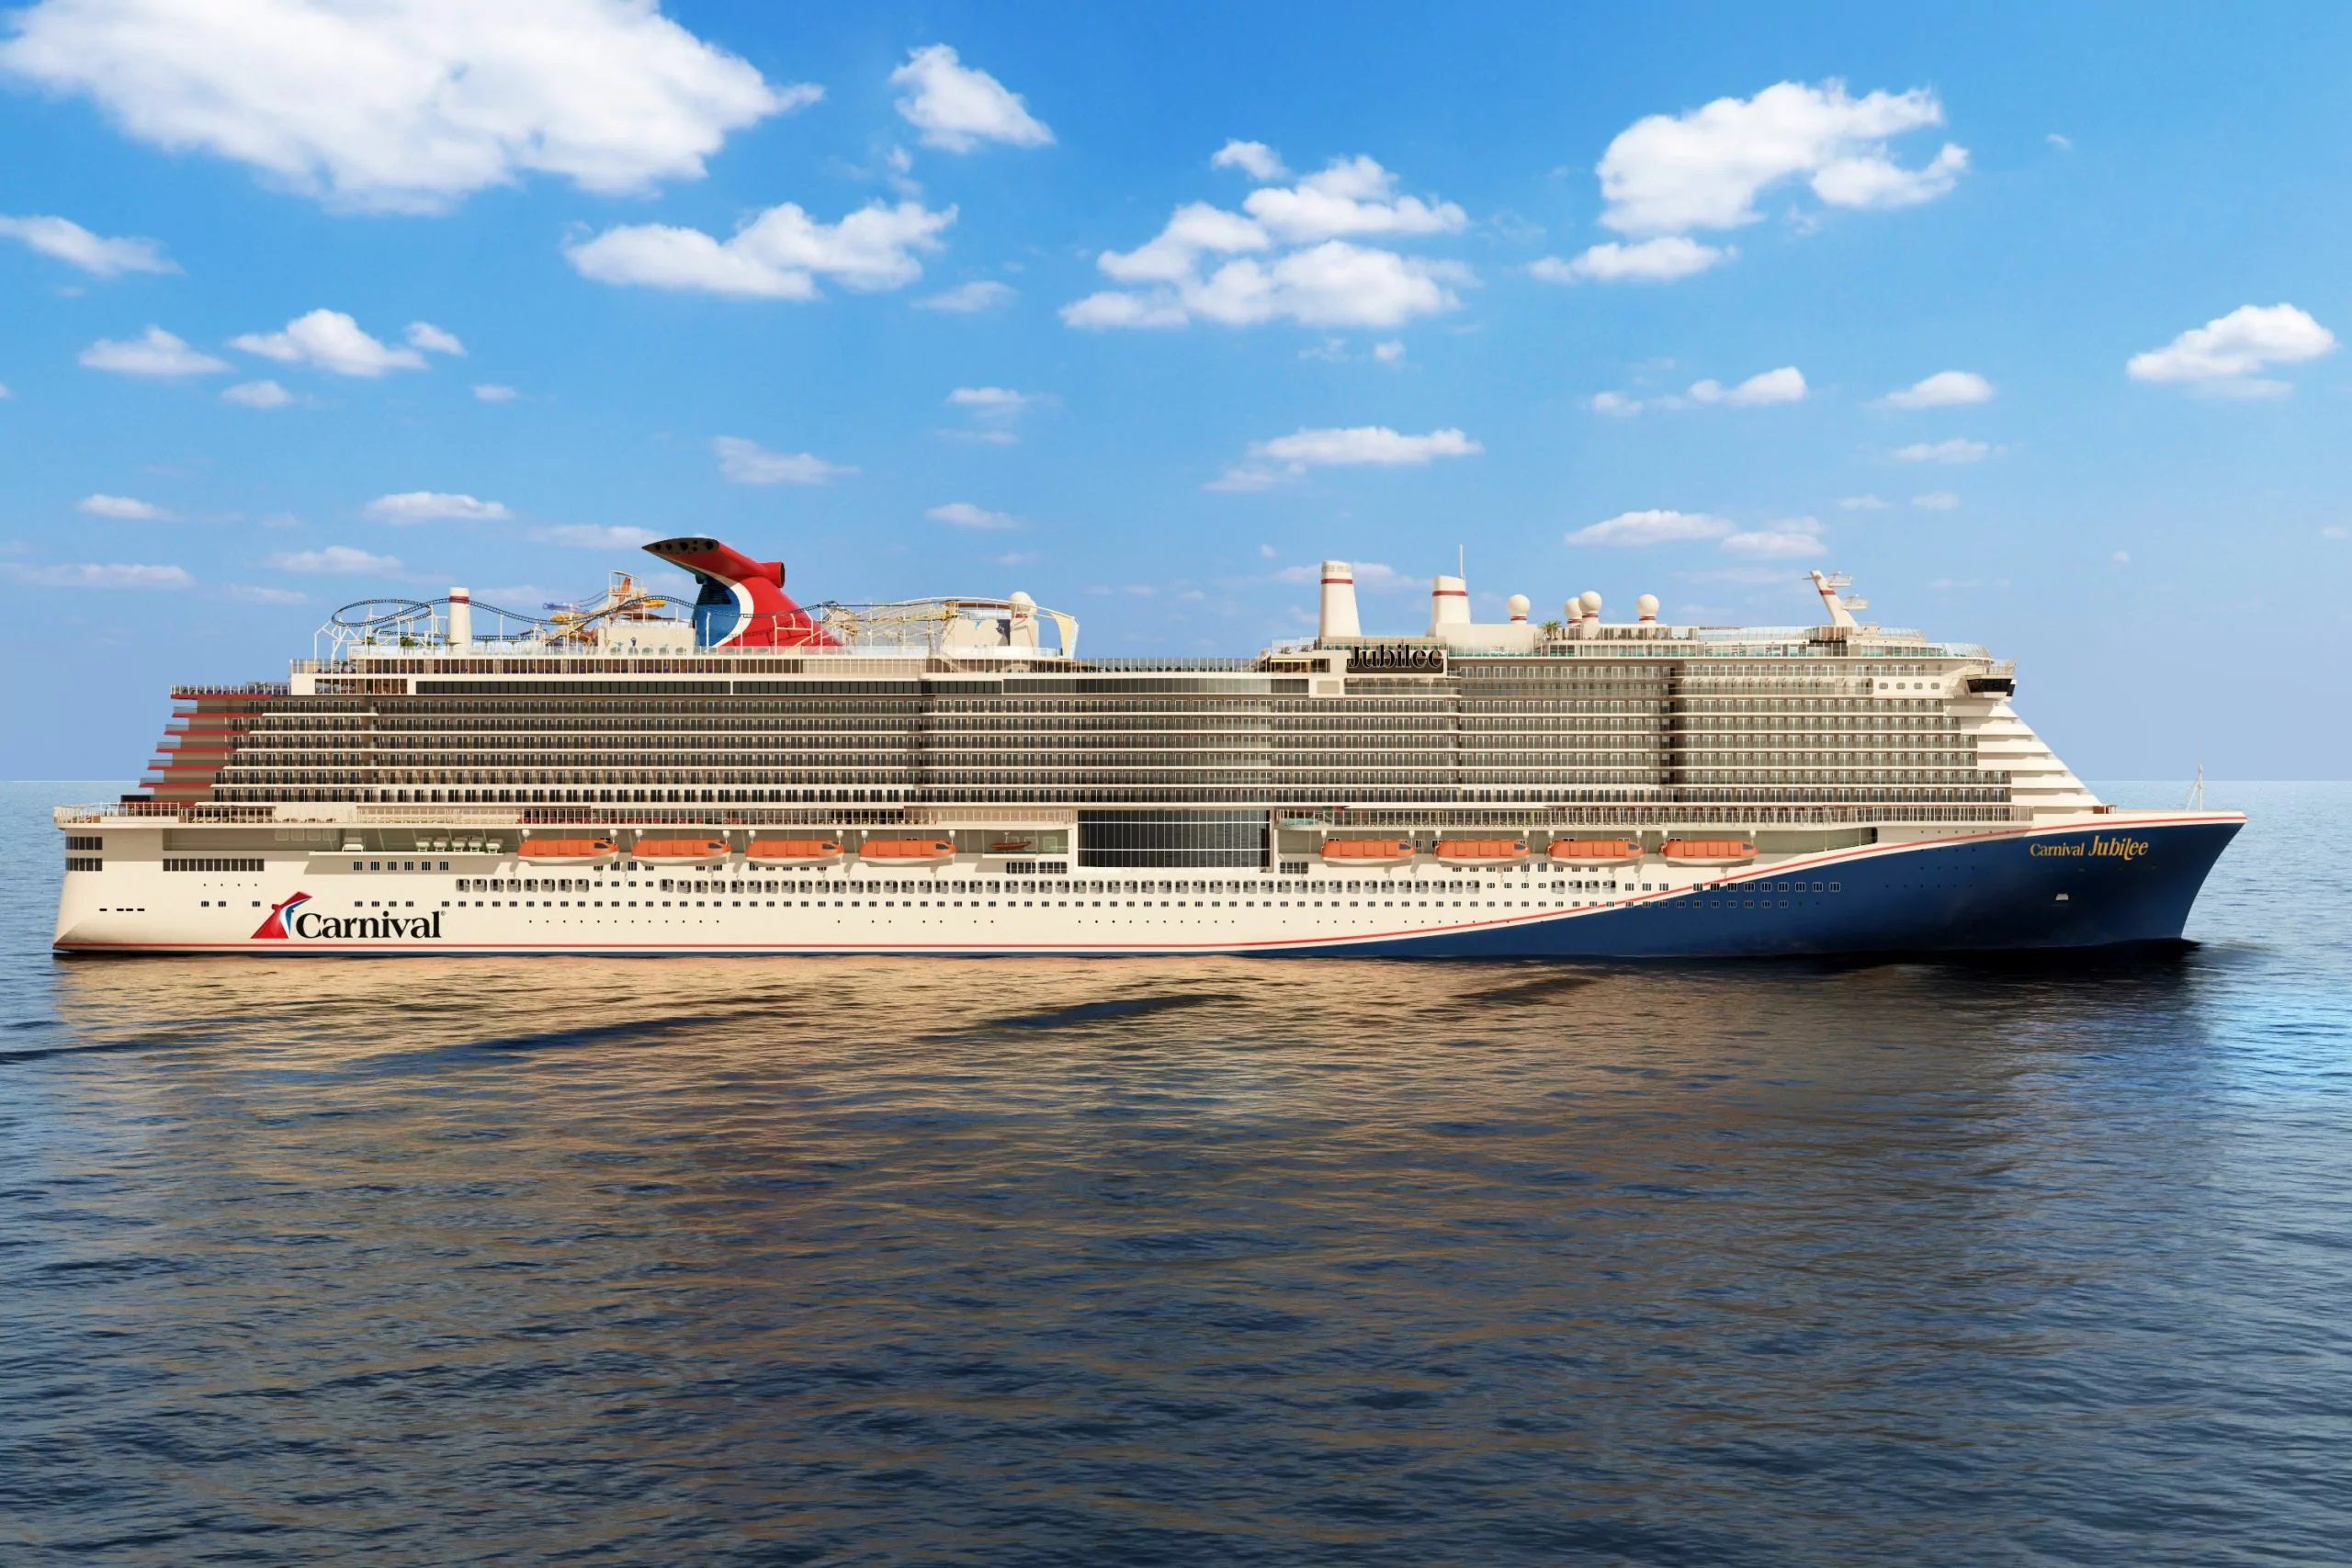 Artist's rendering of Carnival Jubilee cruise ship